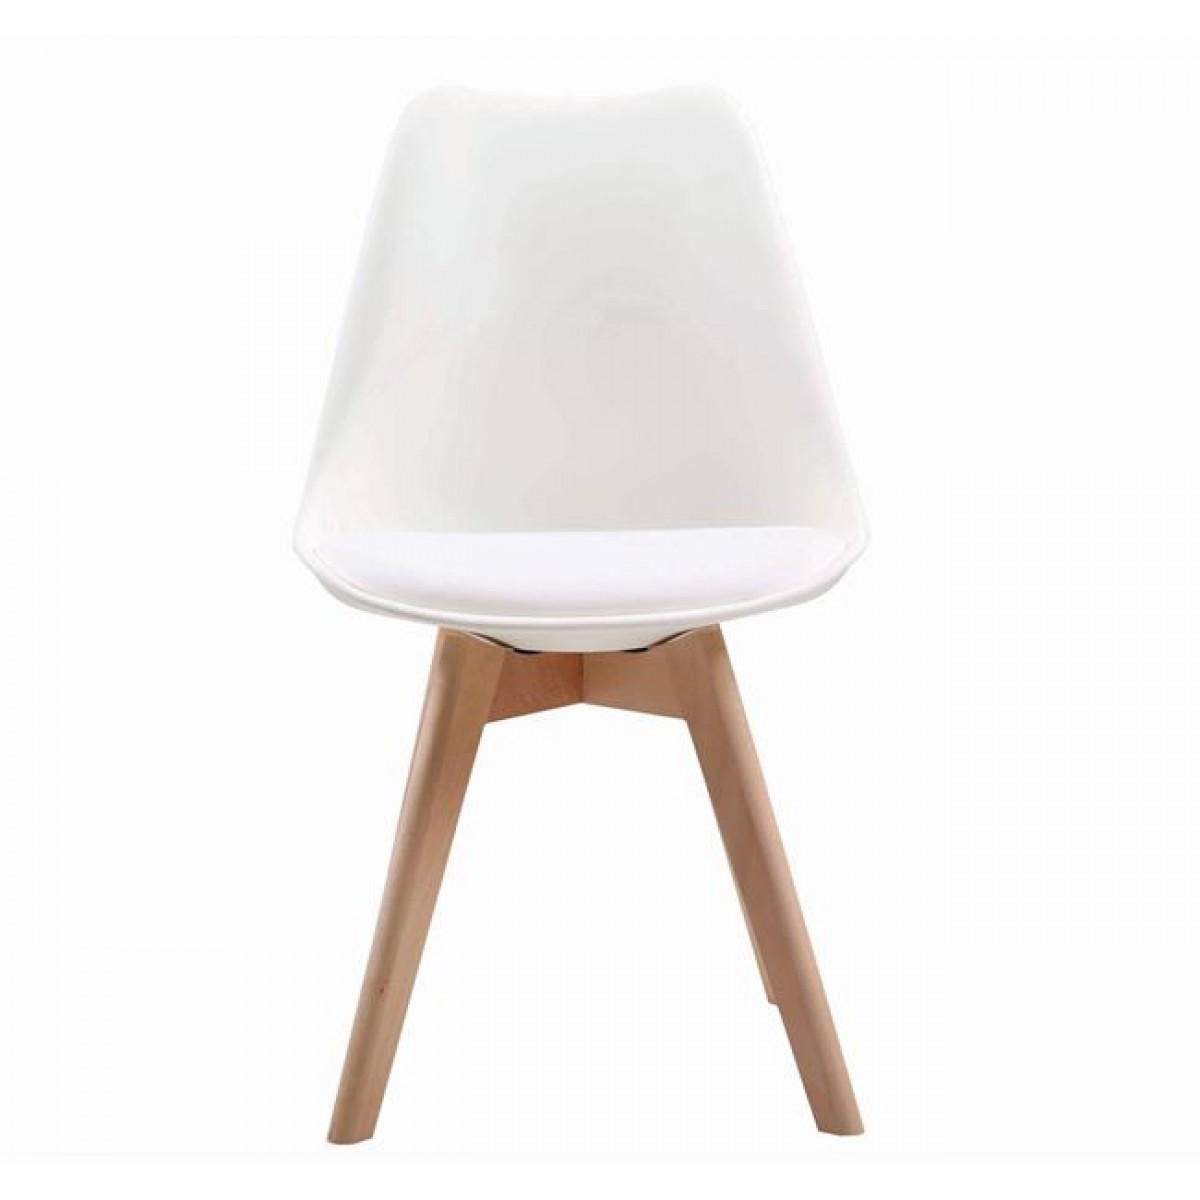 Minimal Martin καρέκλα pp λευκή με ξύλινη βάση